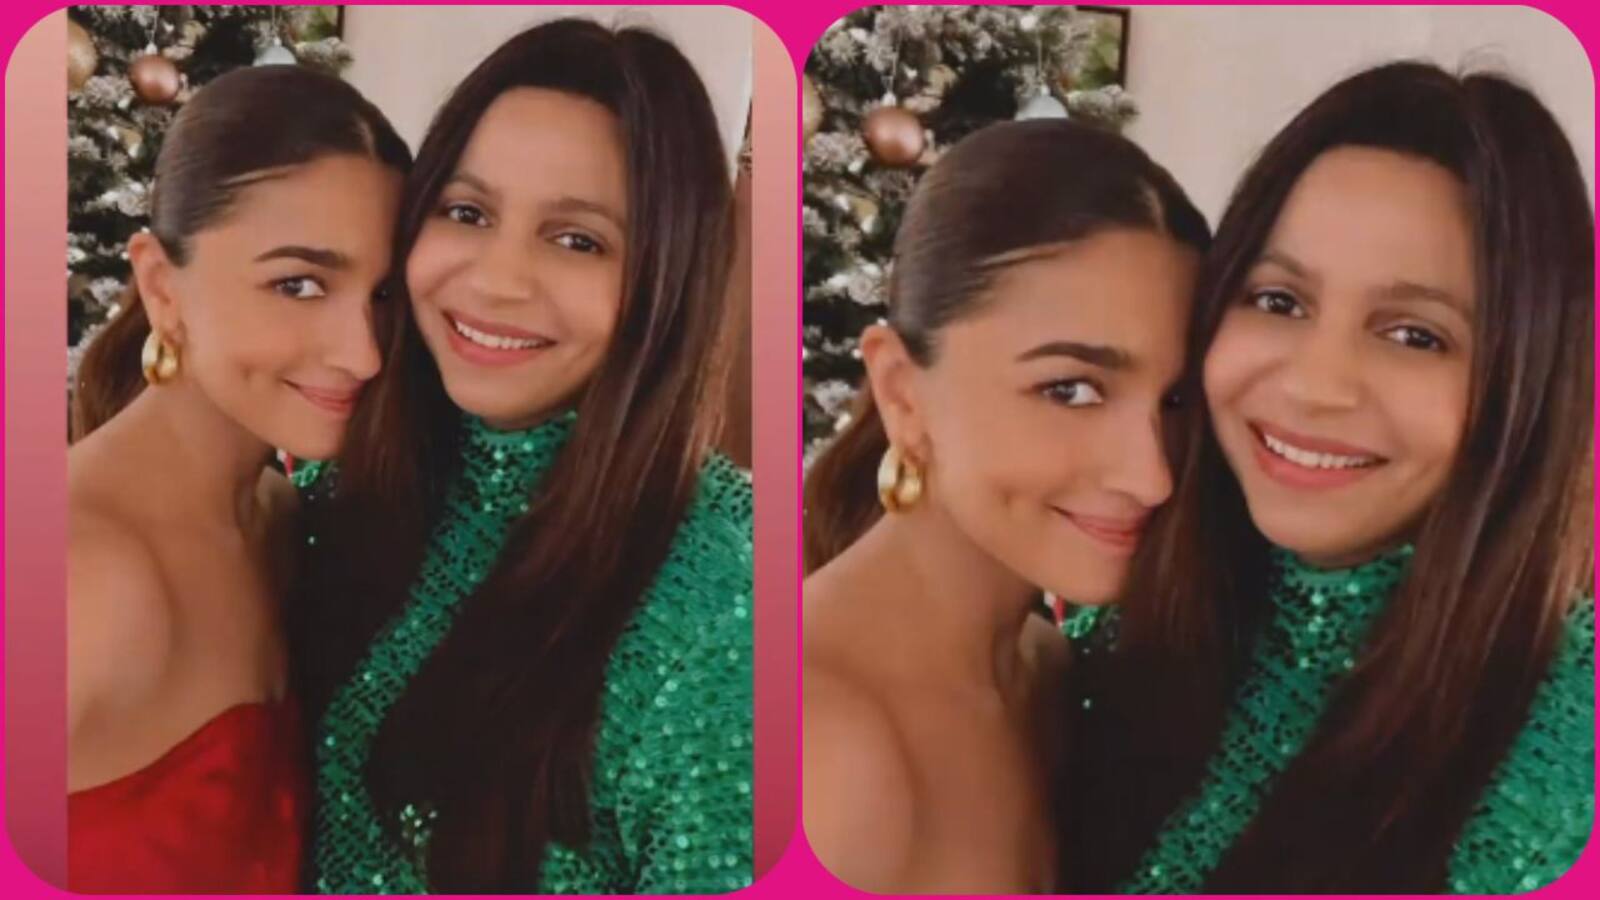 Alia and Shaheen's lovely selfie